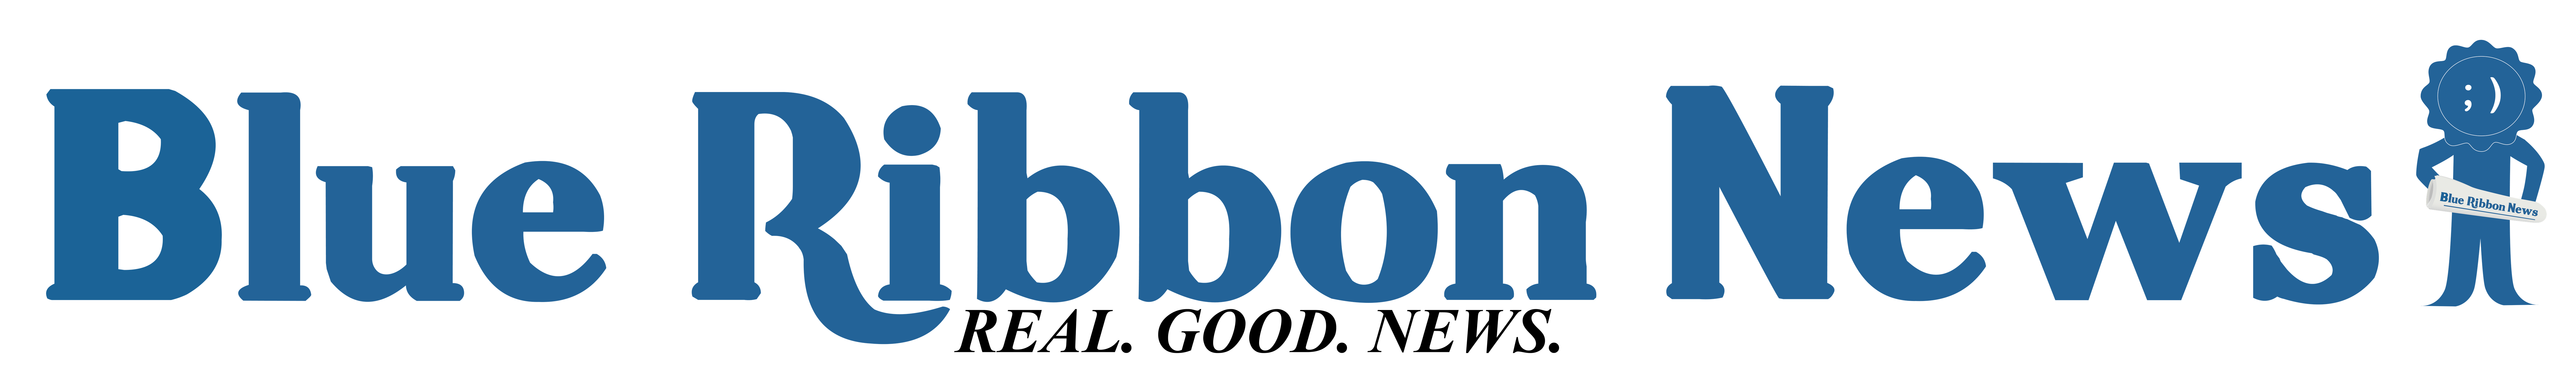 Blue Ribbon News logo with man paper 09_07_2018 FINAL real good news-01